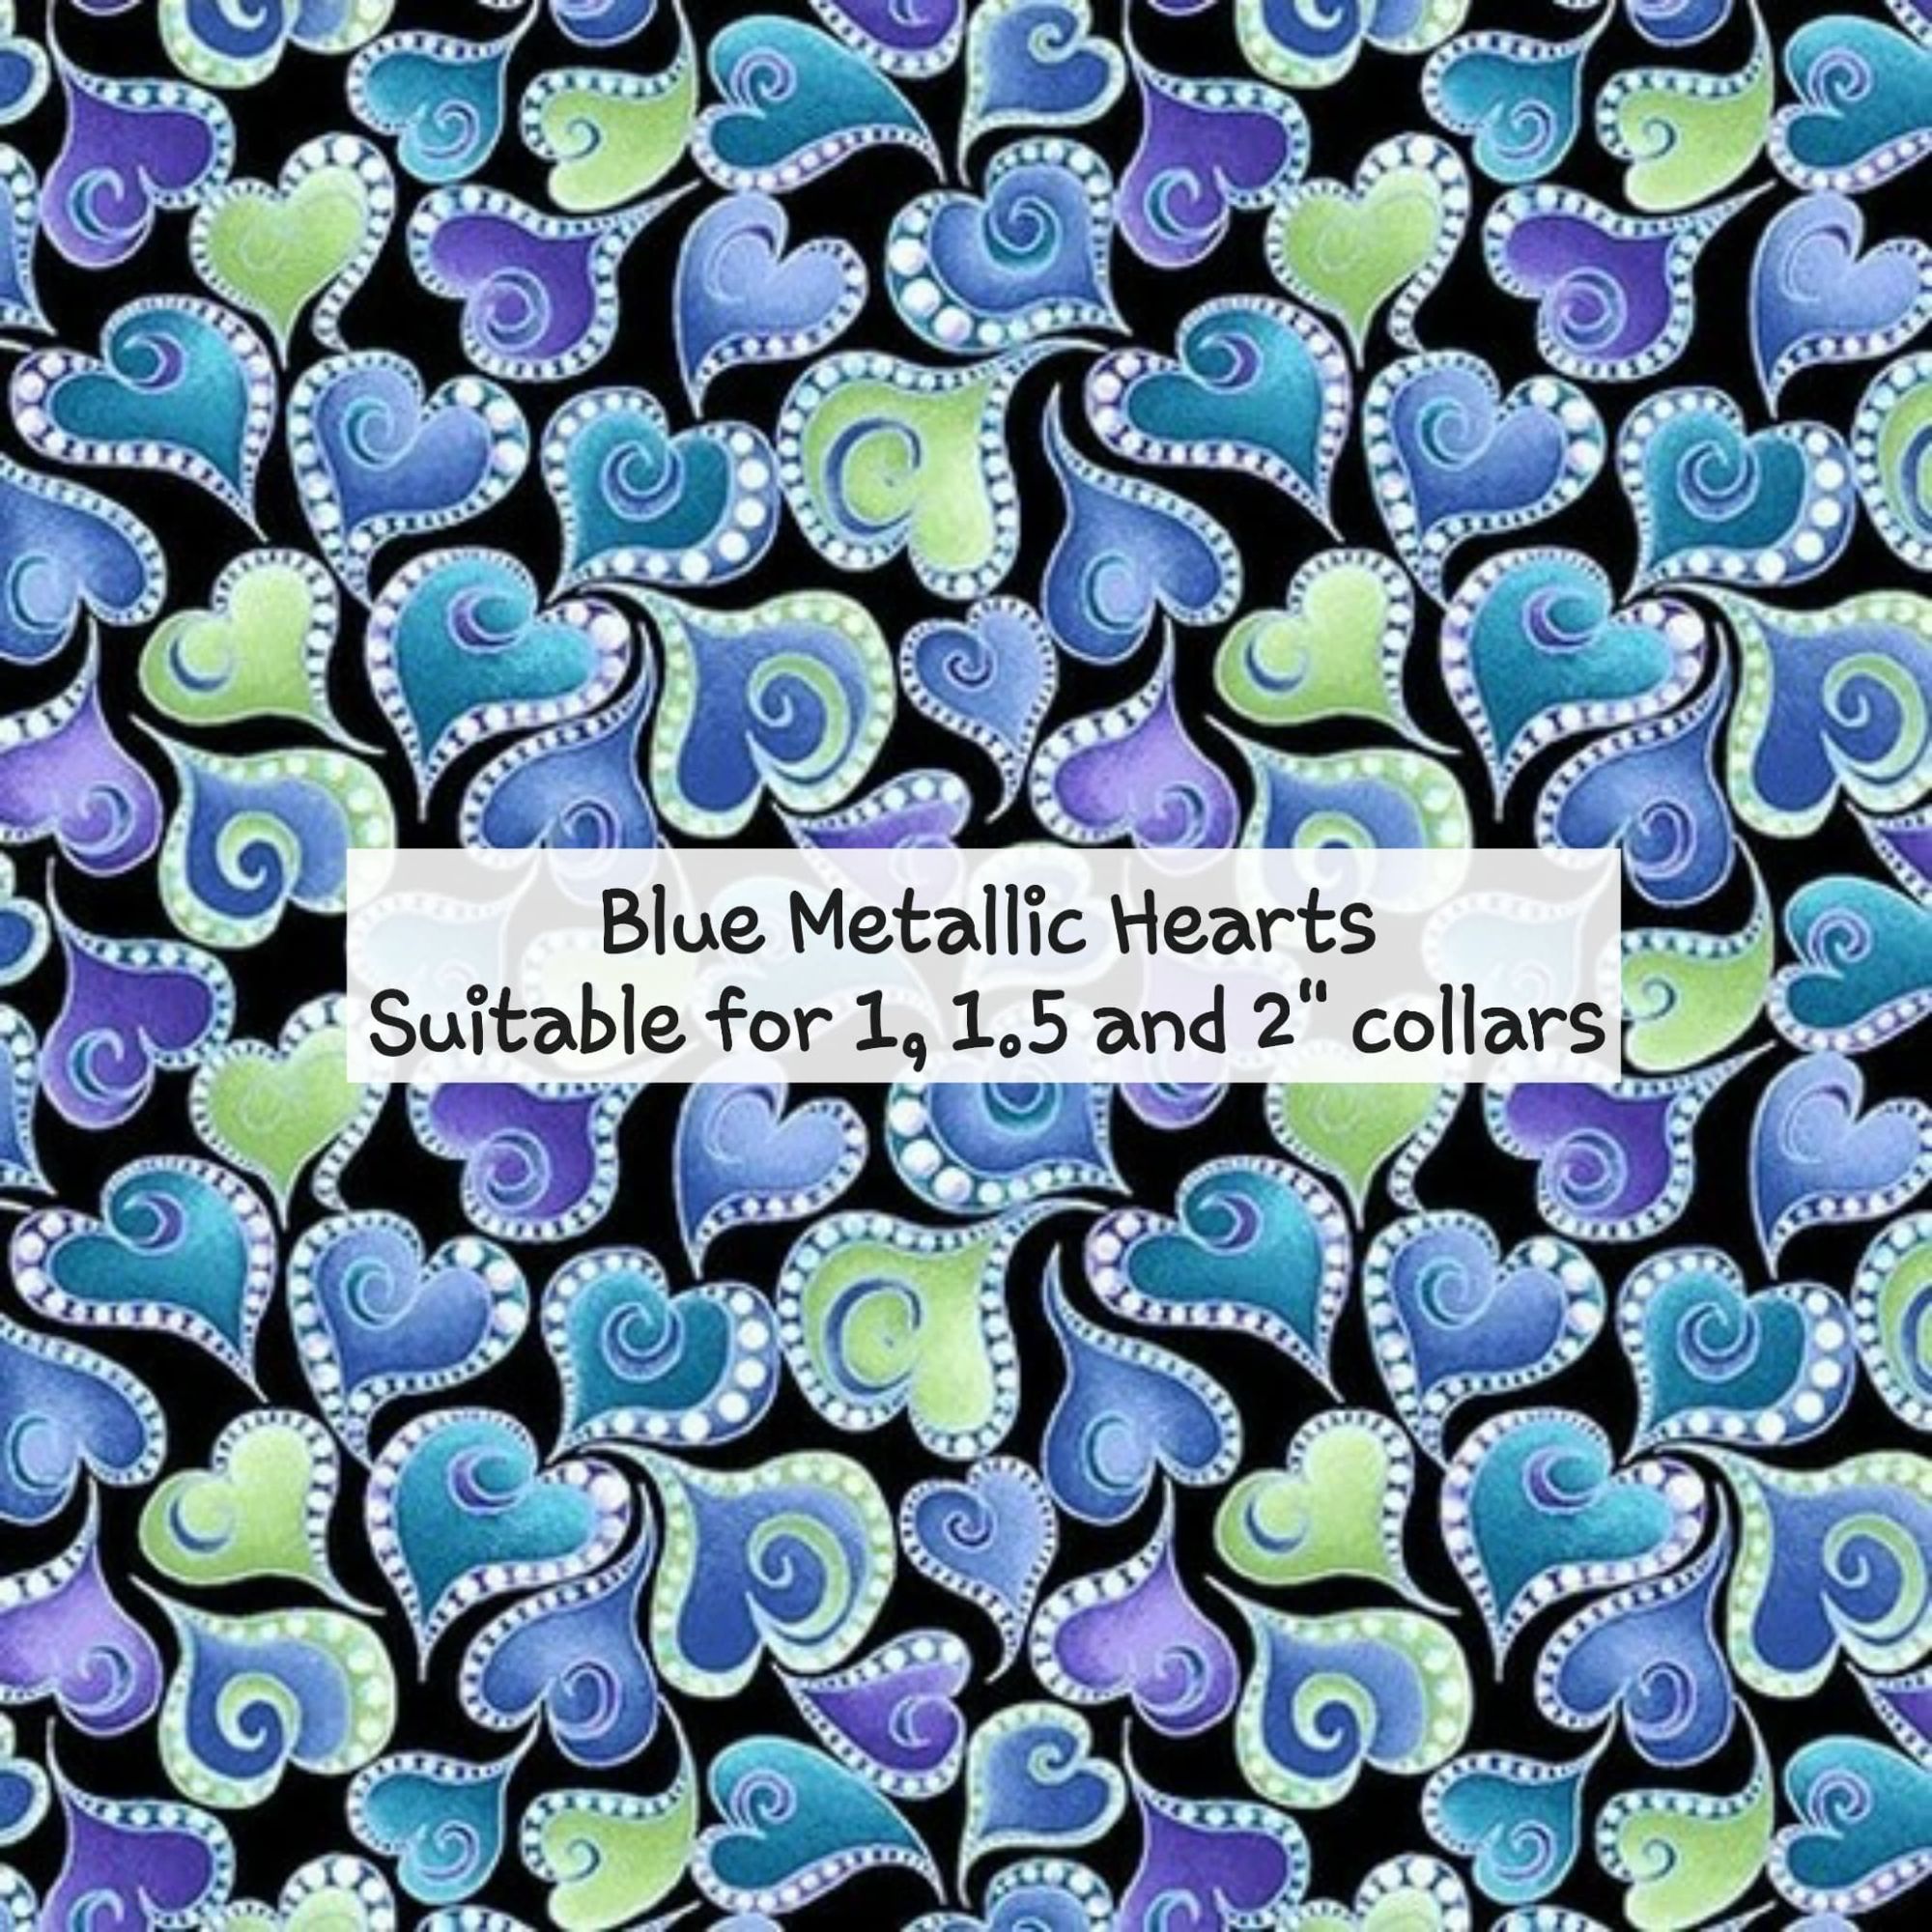 Blue Metallic Hearts